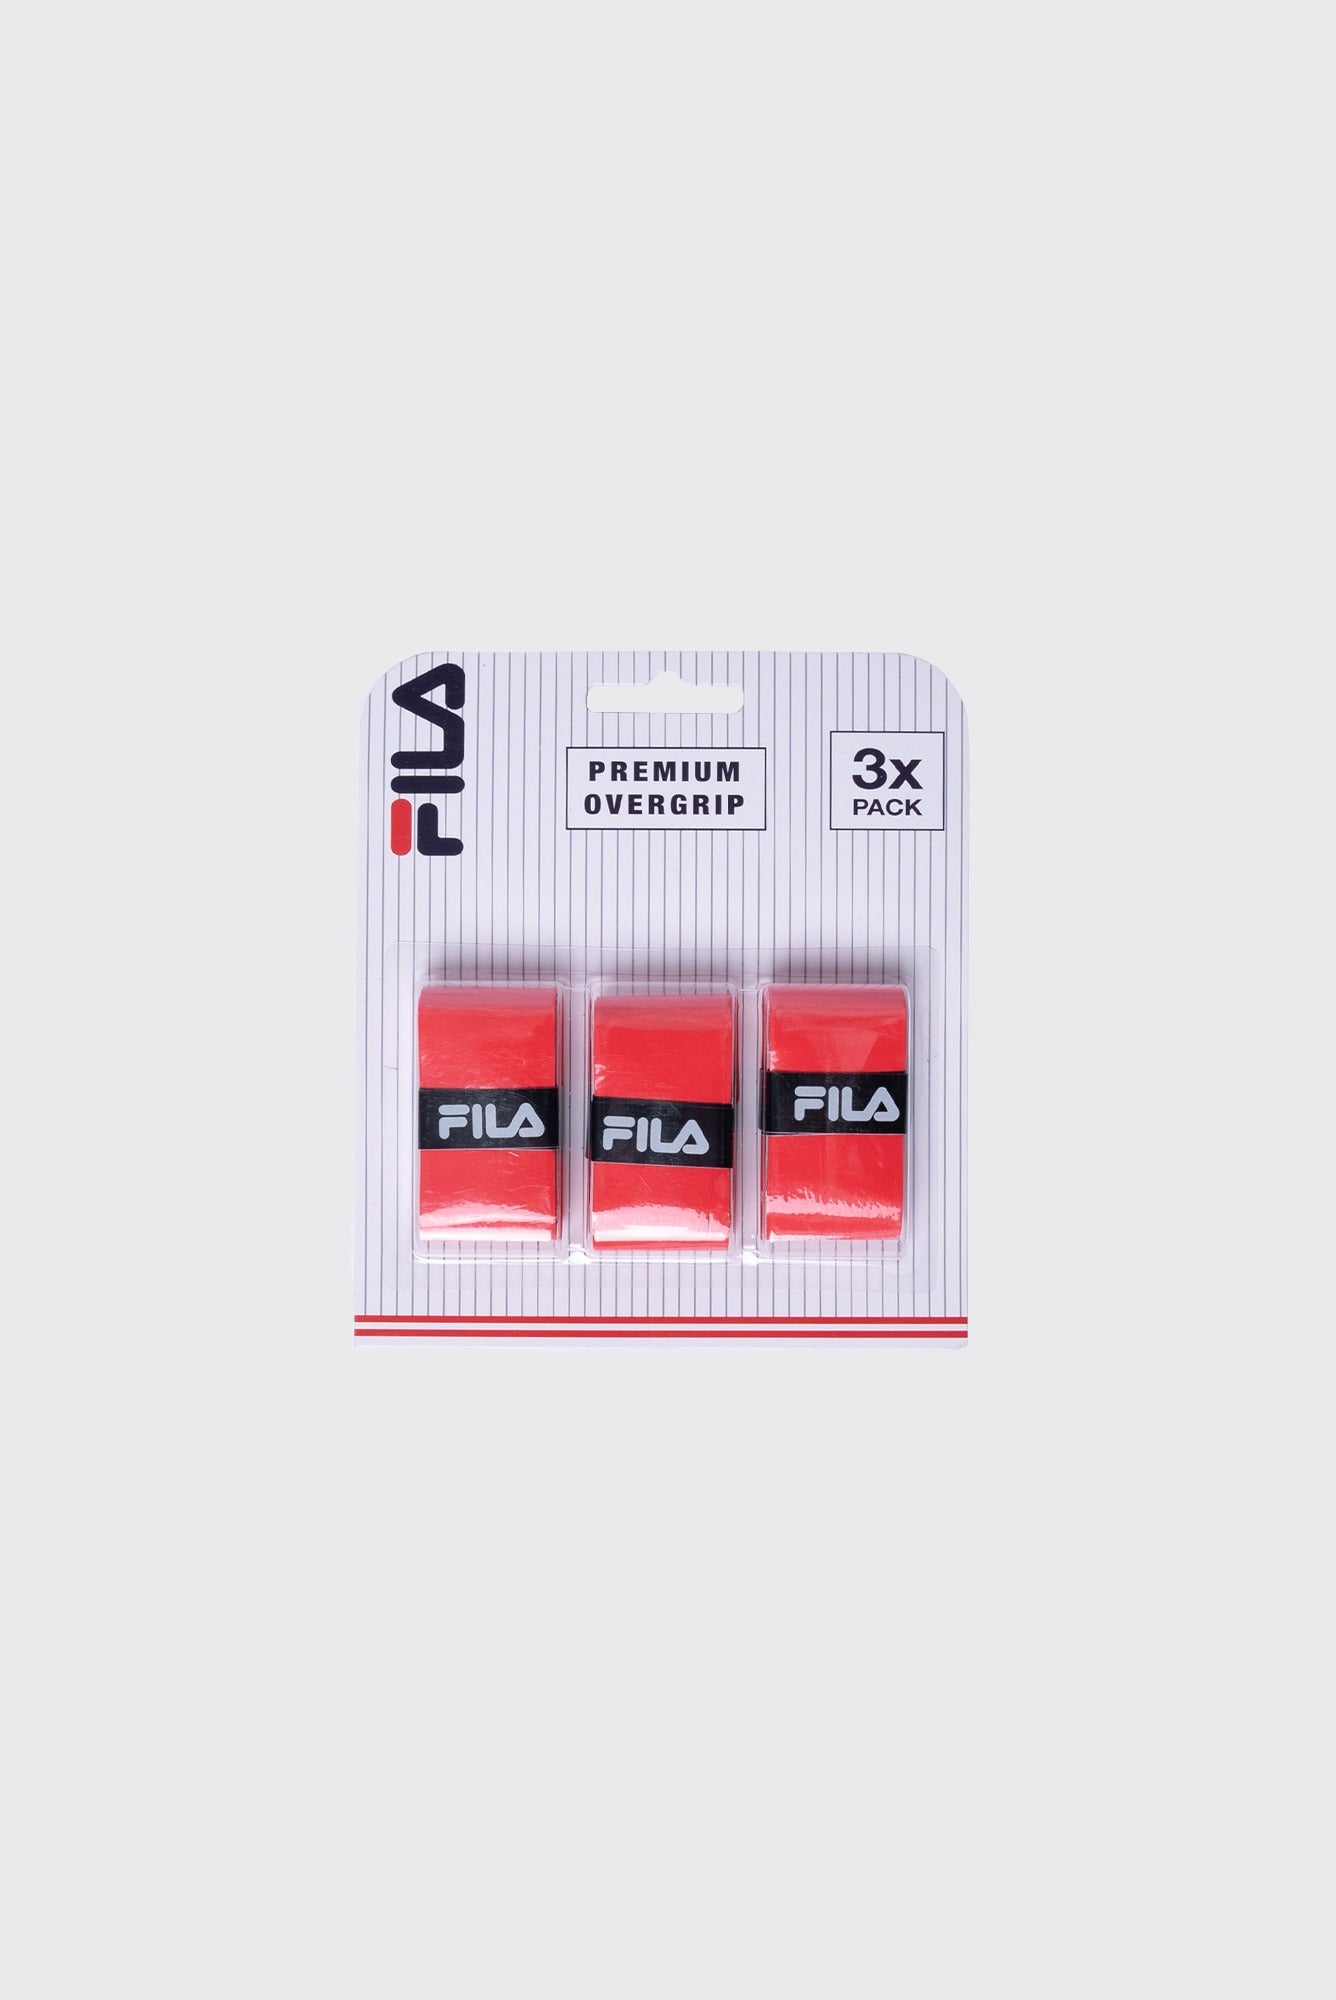 FILA Premium Overgrip T500A 3 Pack